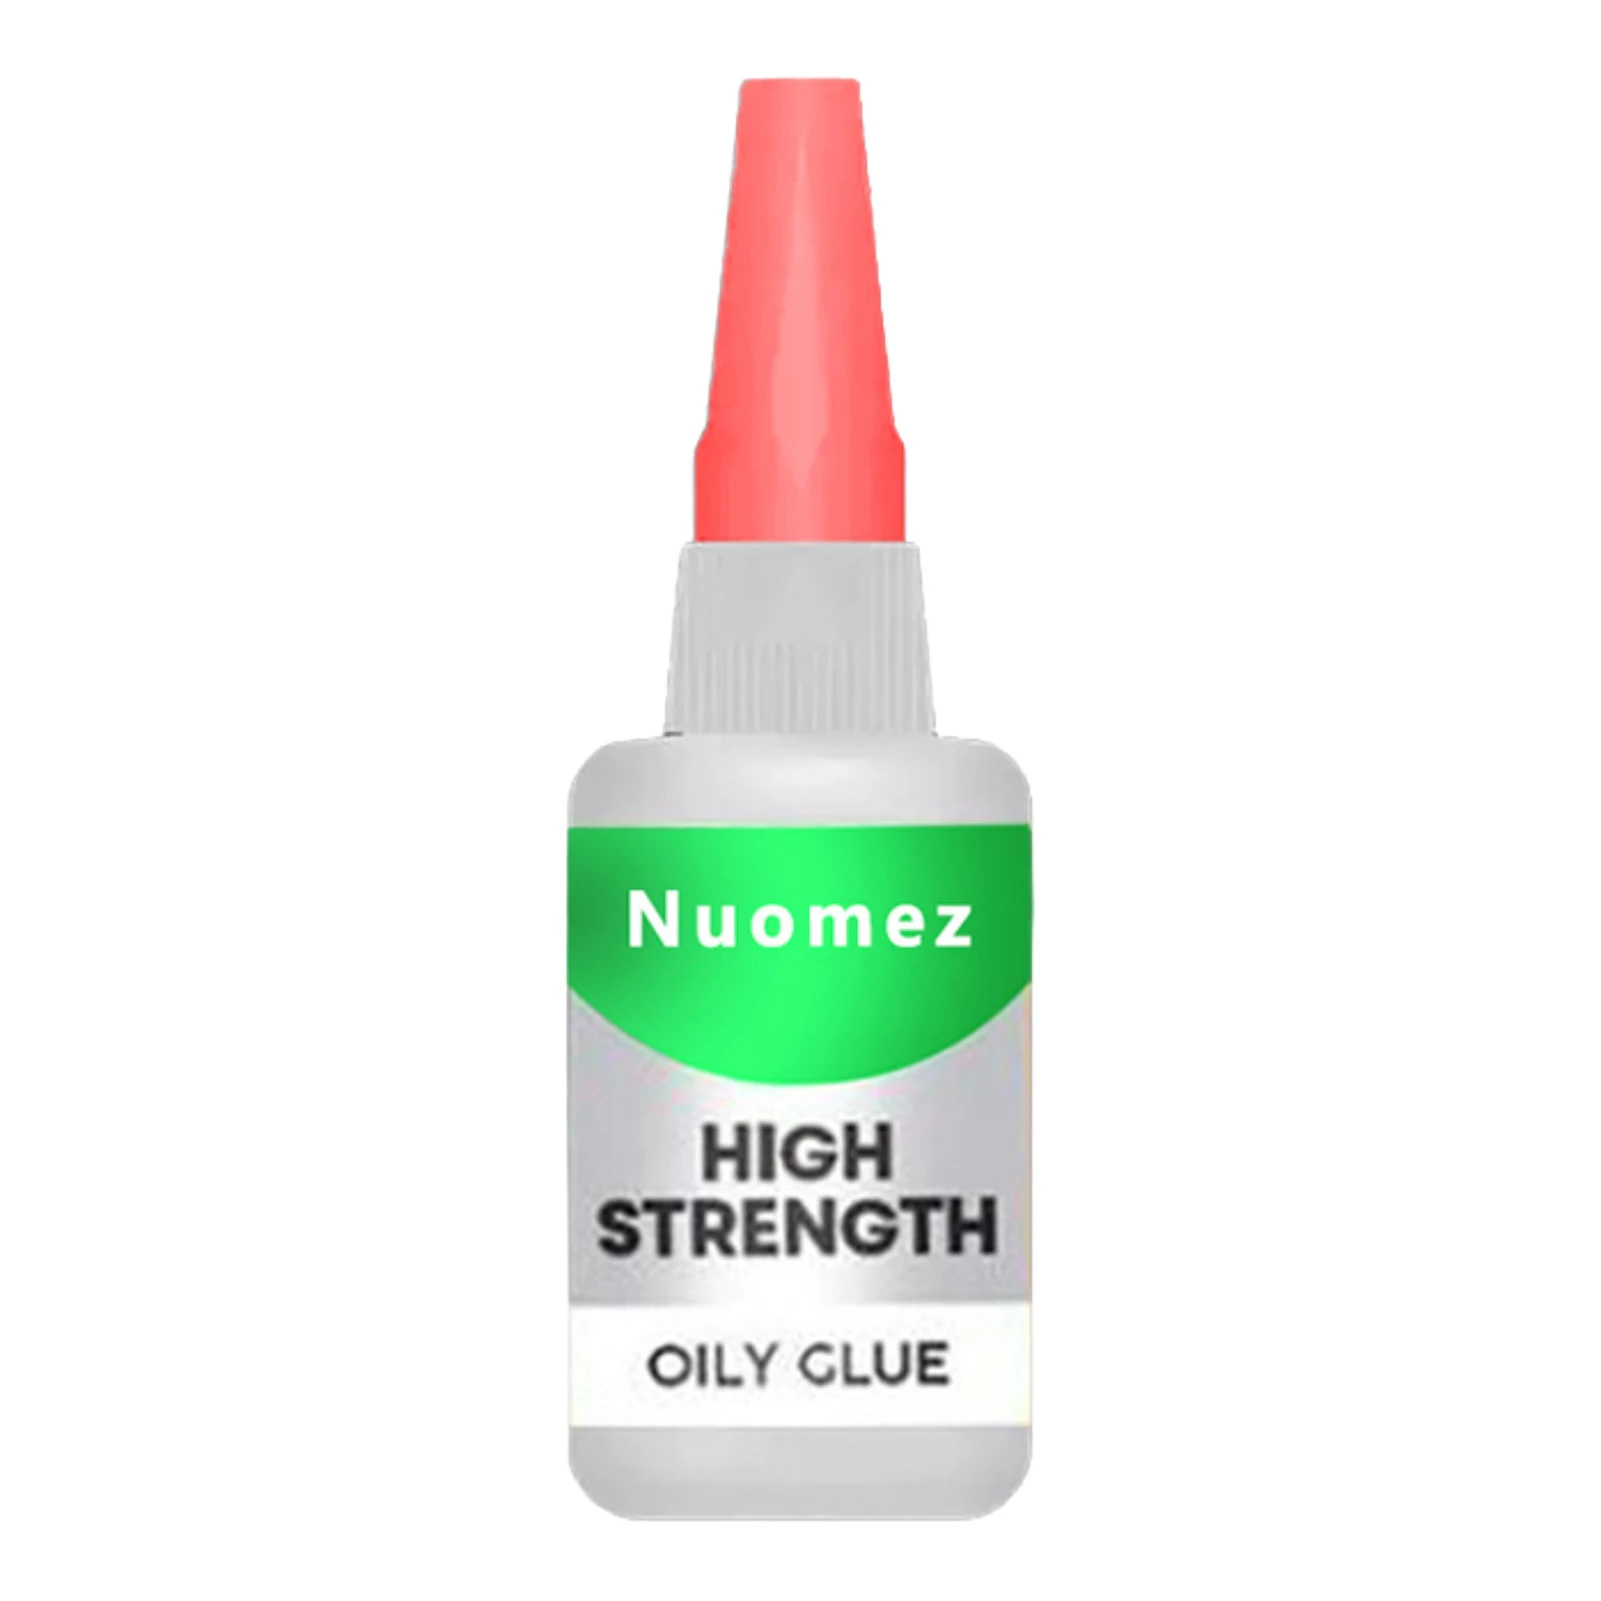 

Welding High-Strength Oily Glue Welding High-Strength Oily Glue Uniglues Universal Super Glue All Purpose Super Glue Extra